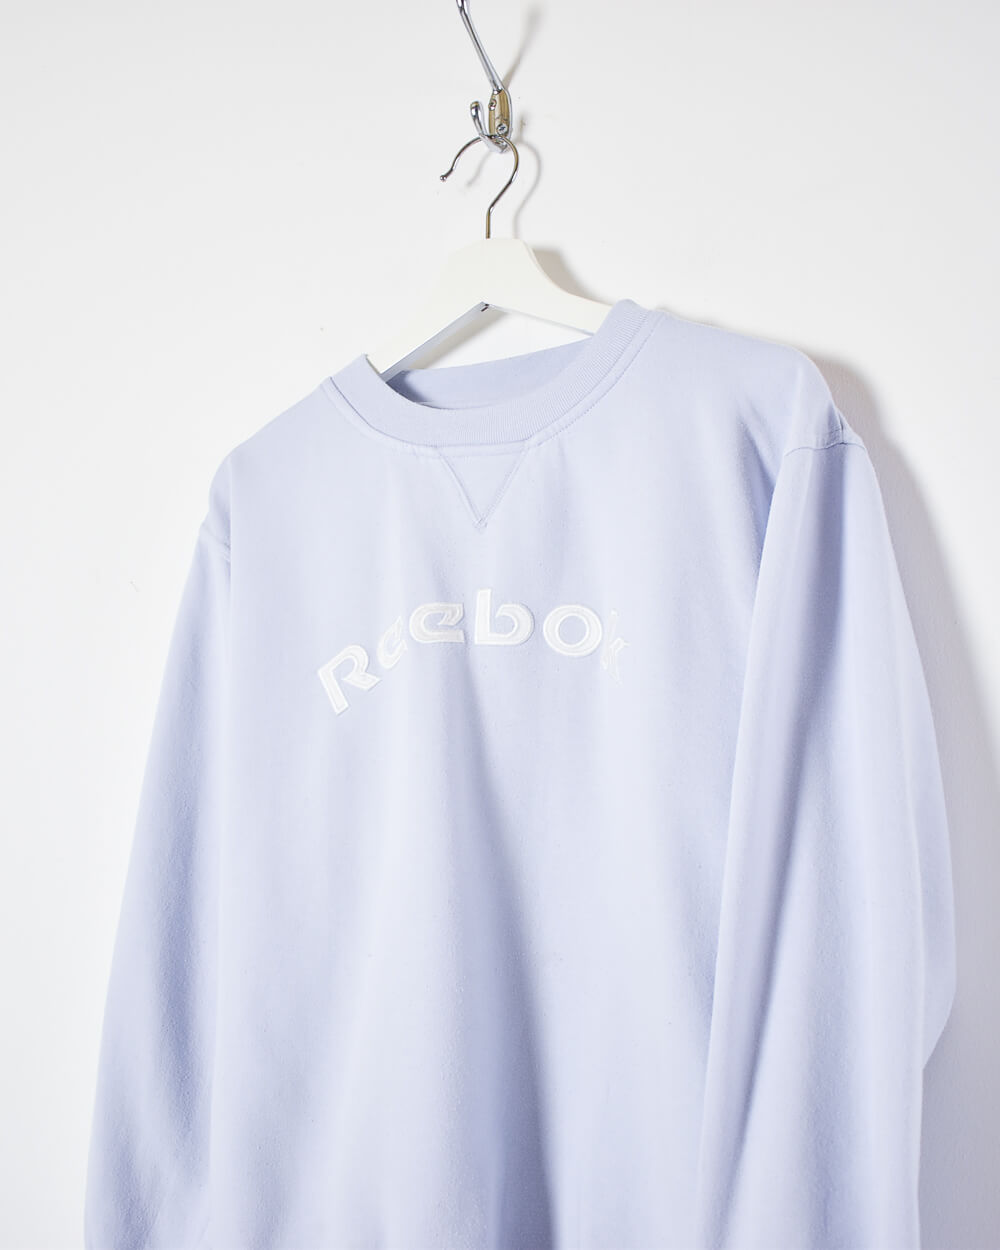 Baby Reebok Women's Sweatshirt - Large